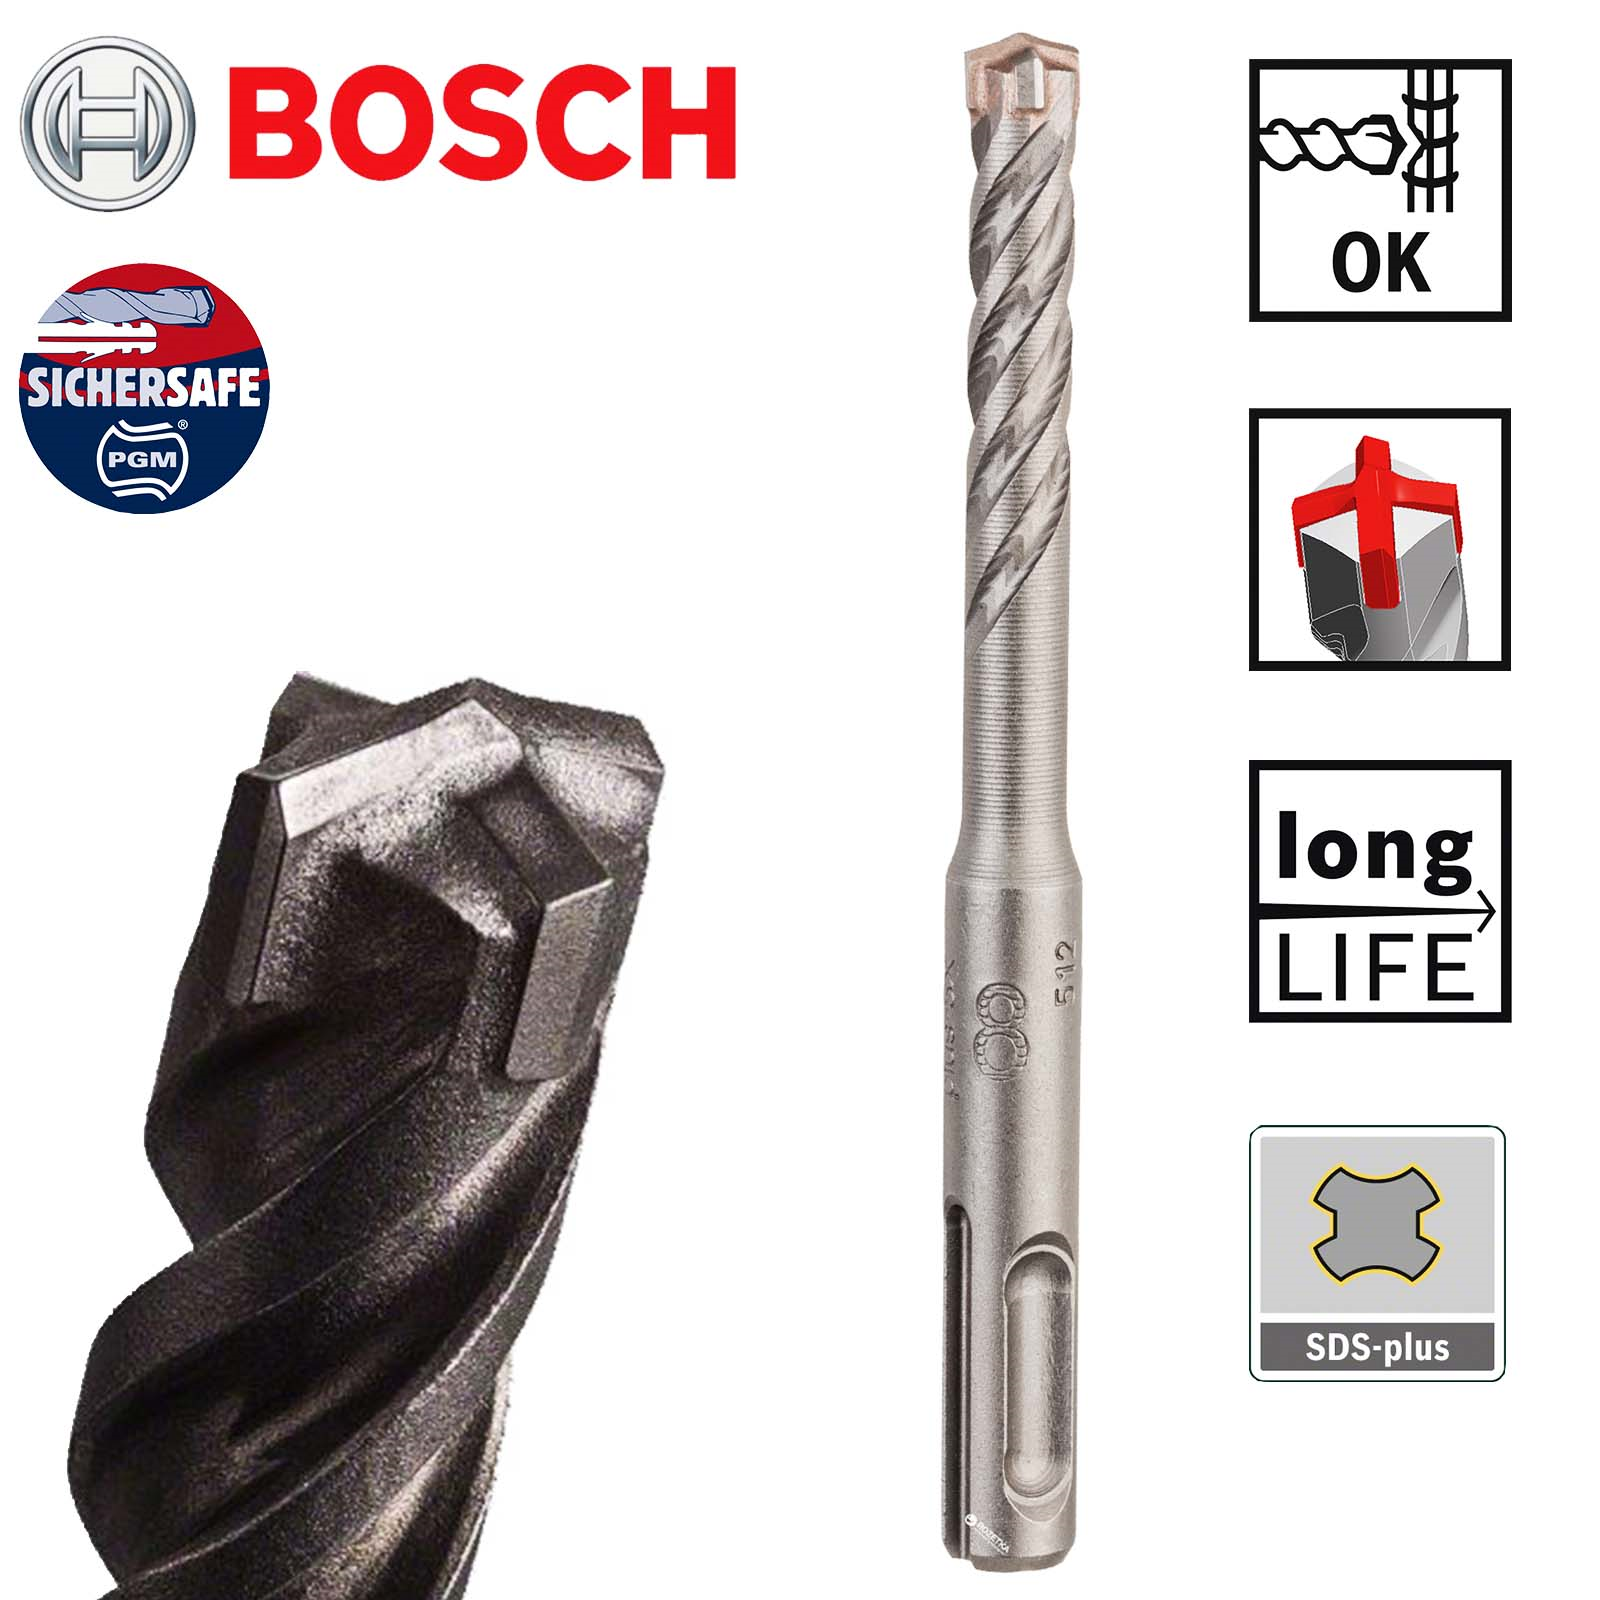 Bosch Sds Max Core Bit Flash Sales, 50% OFF | www.hcb.cat